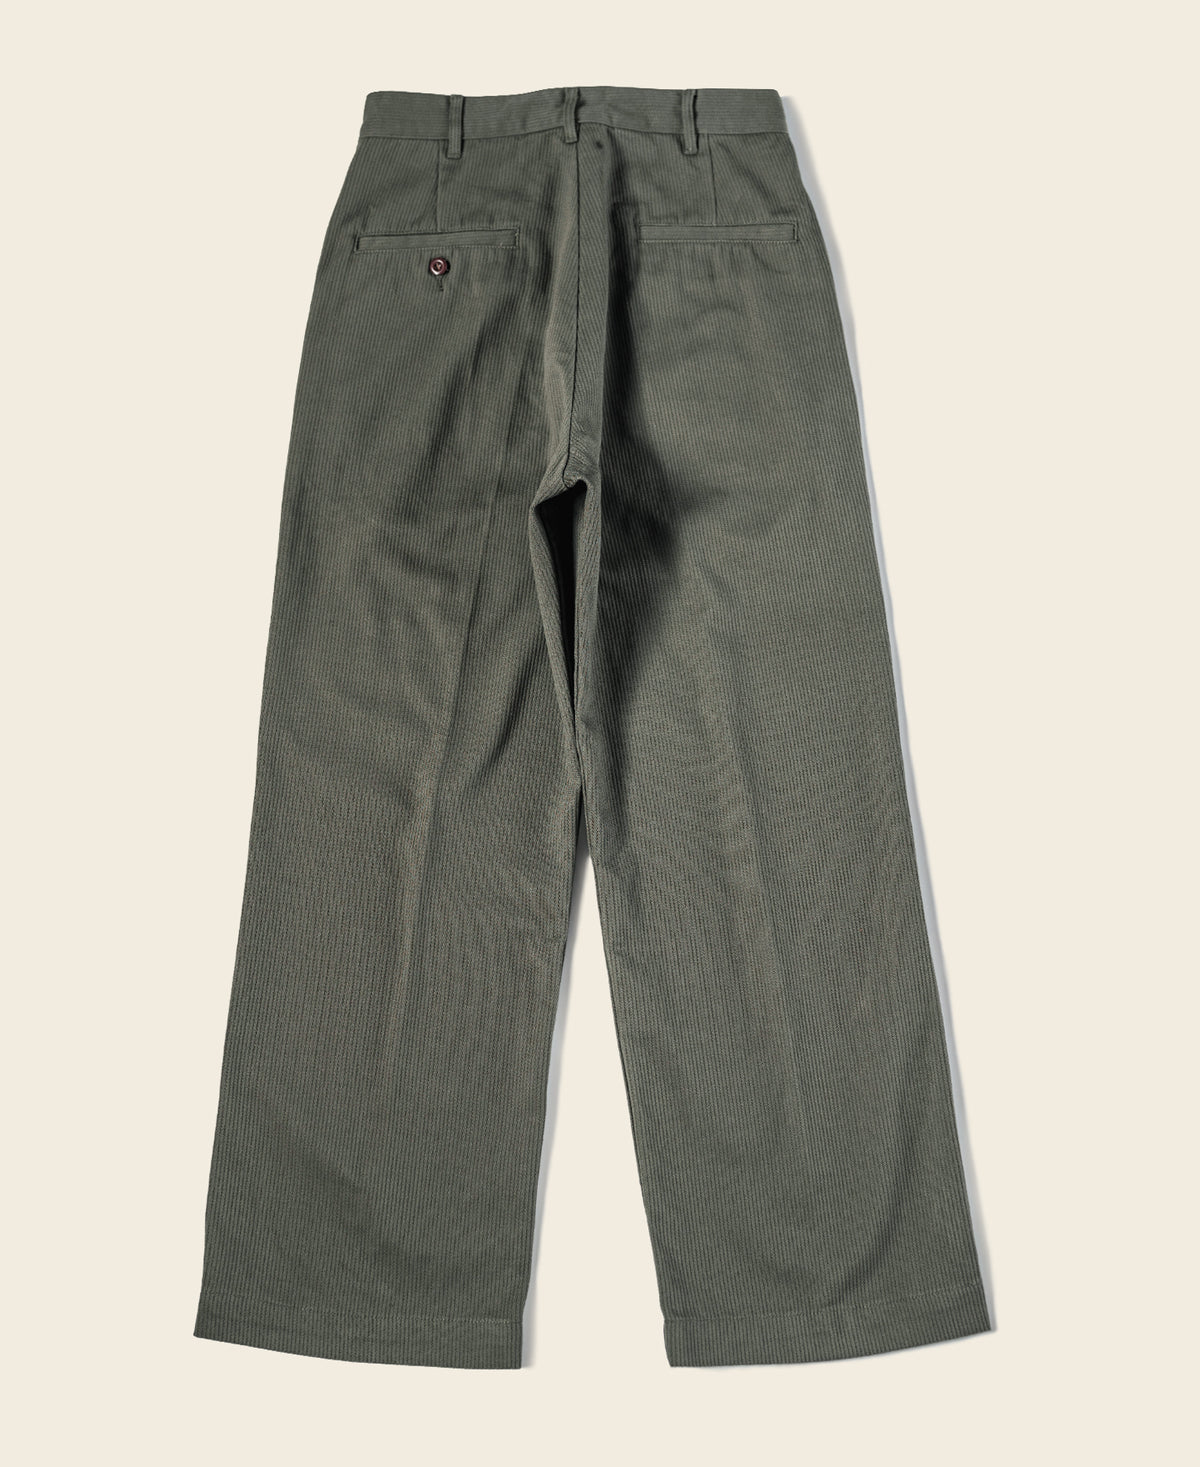 13 oz Cotton Bedford Cord Pants - Olive